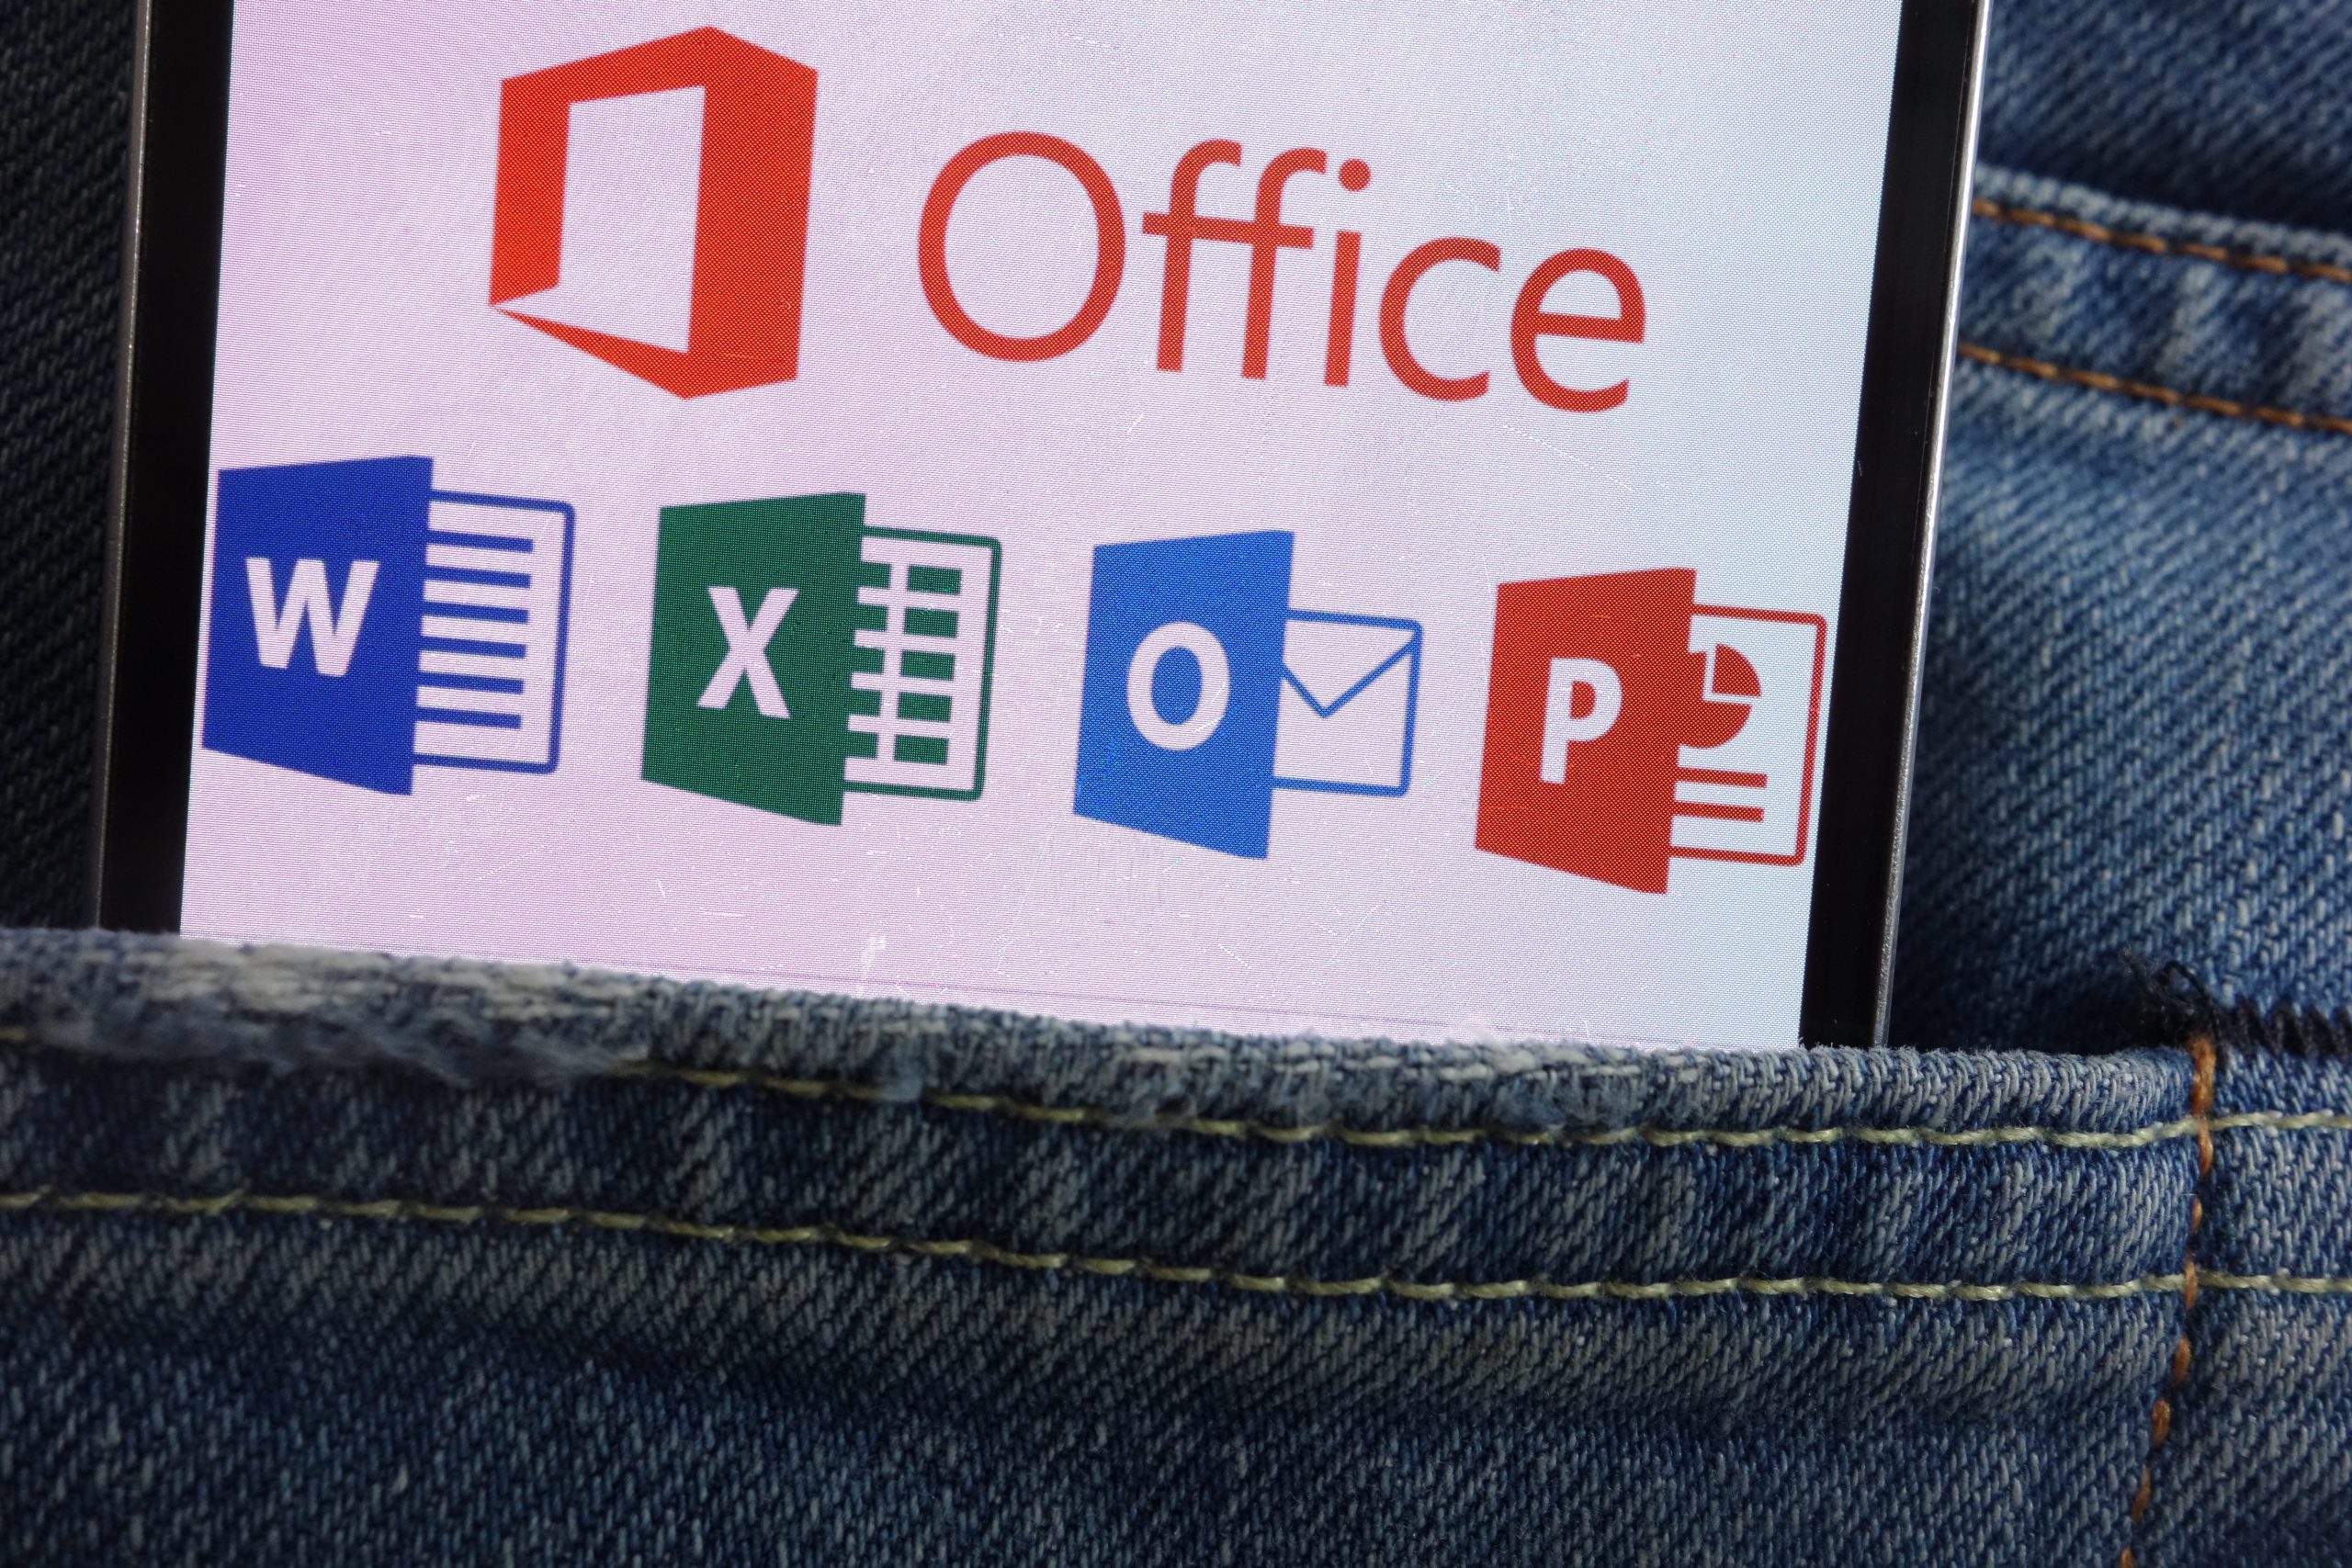 KONSKIE, POLAND - JUNE 01, 2018: Microsoft Office logo displayed on smartphone hidden in jeans pocket